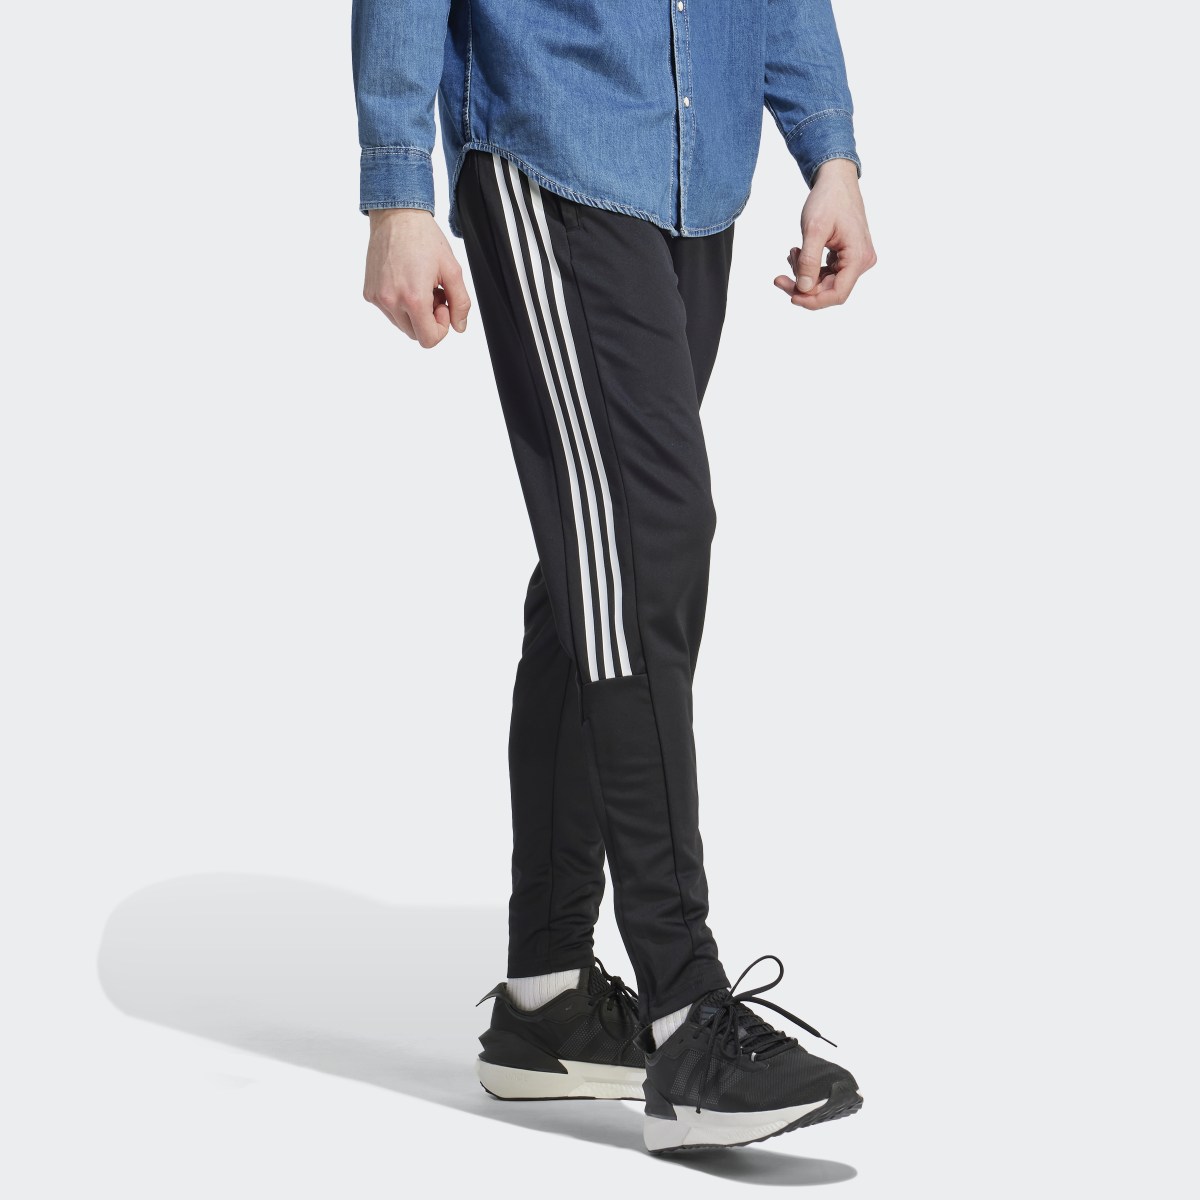 Adidas Tiro Wordmark Pants. 4